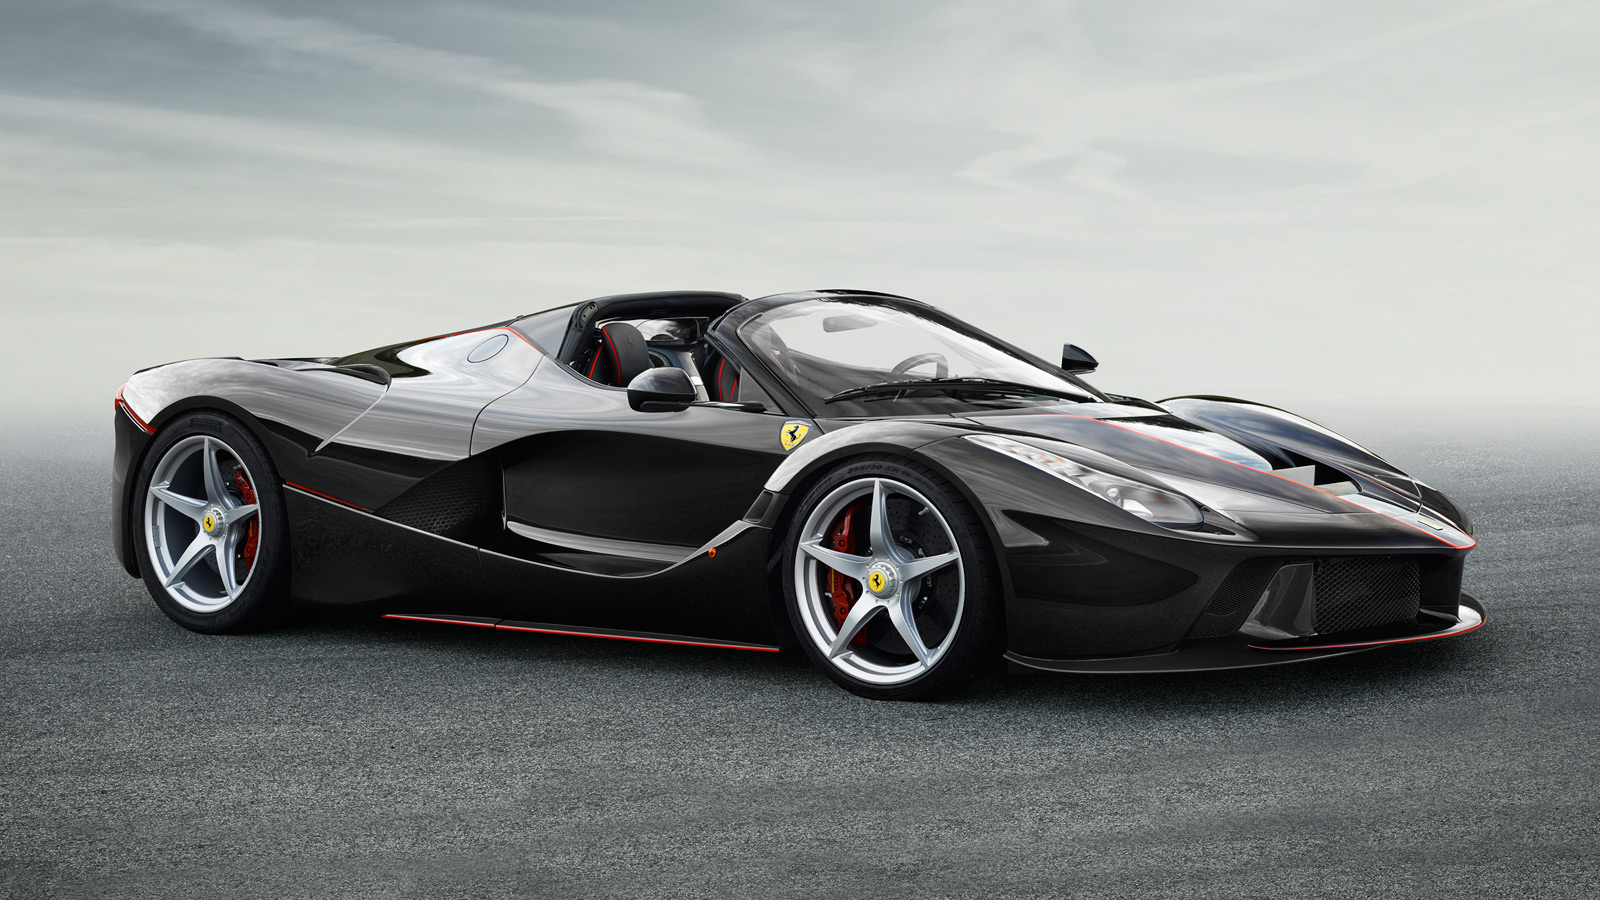 Low Mileage Ferrari F40 Valued at $3.5 Million, Engine Underwent